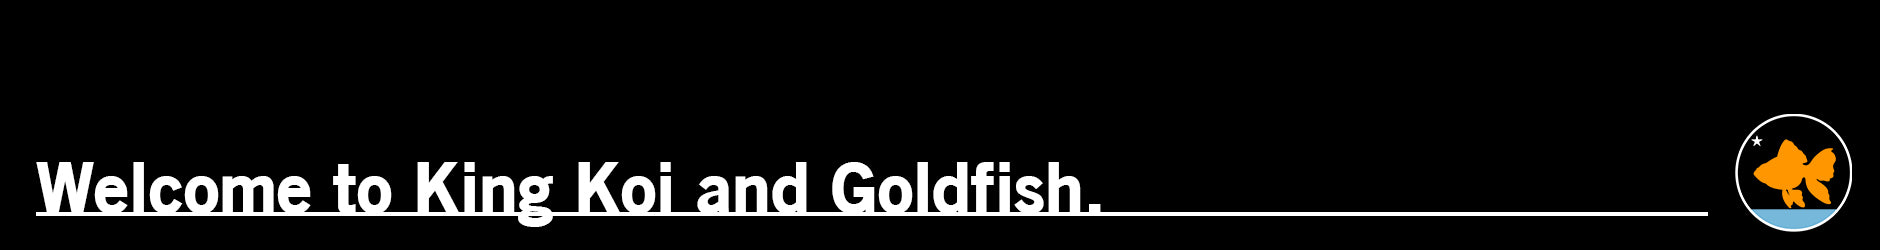 Welcome to King Koi Goldfish.